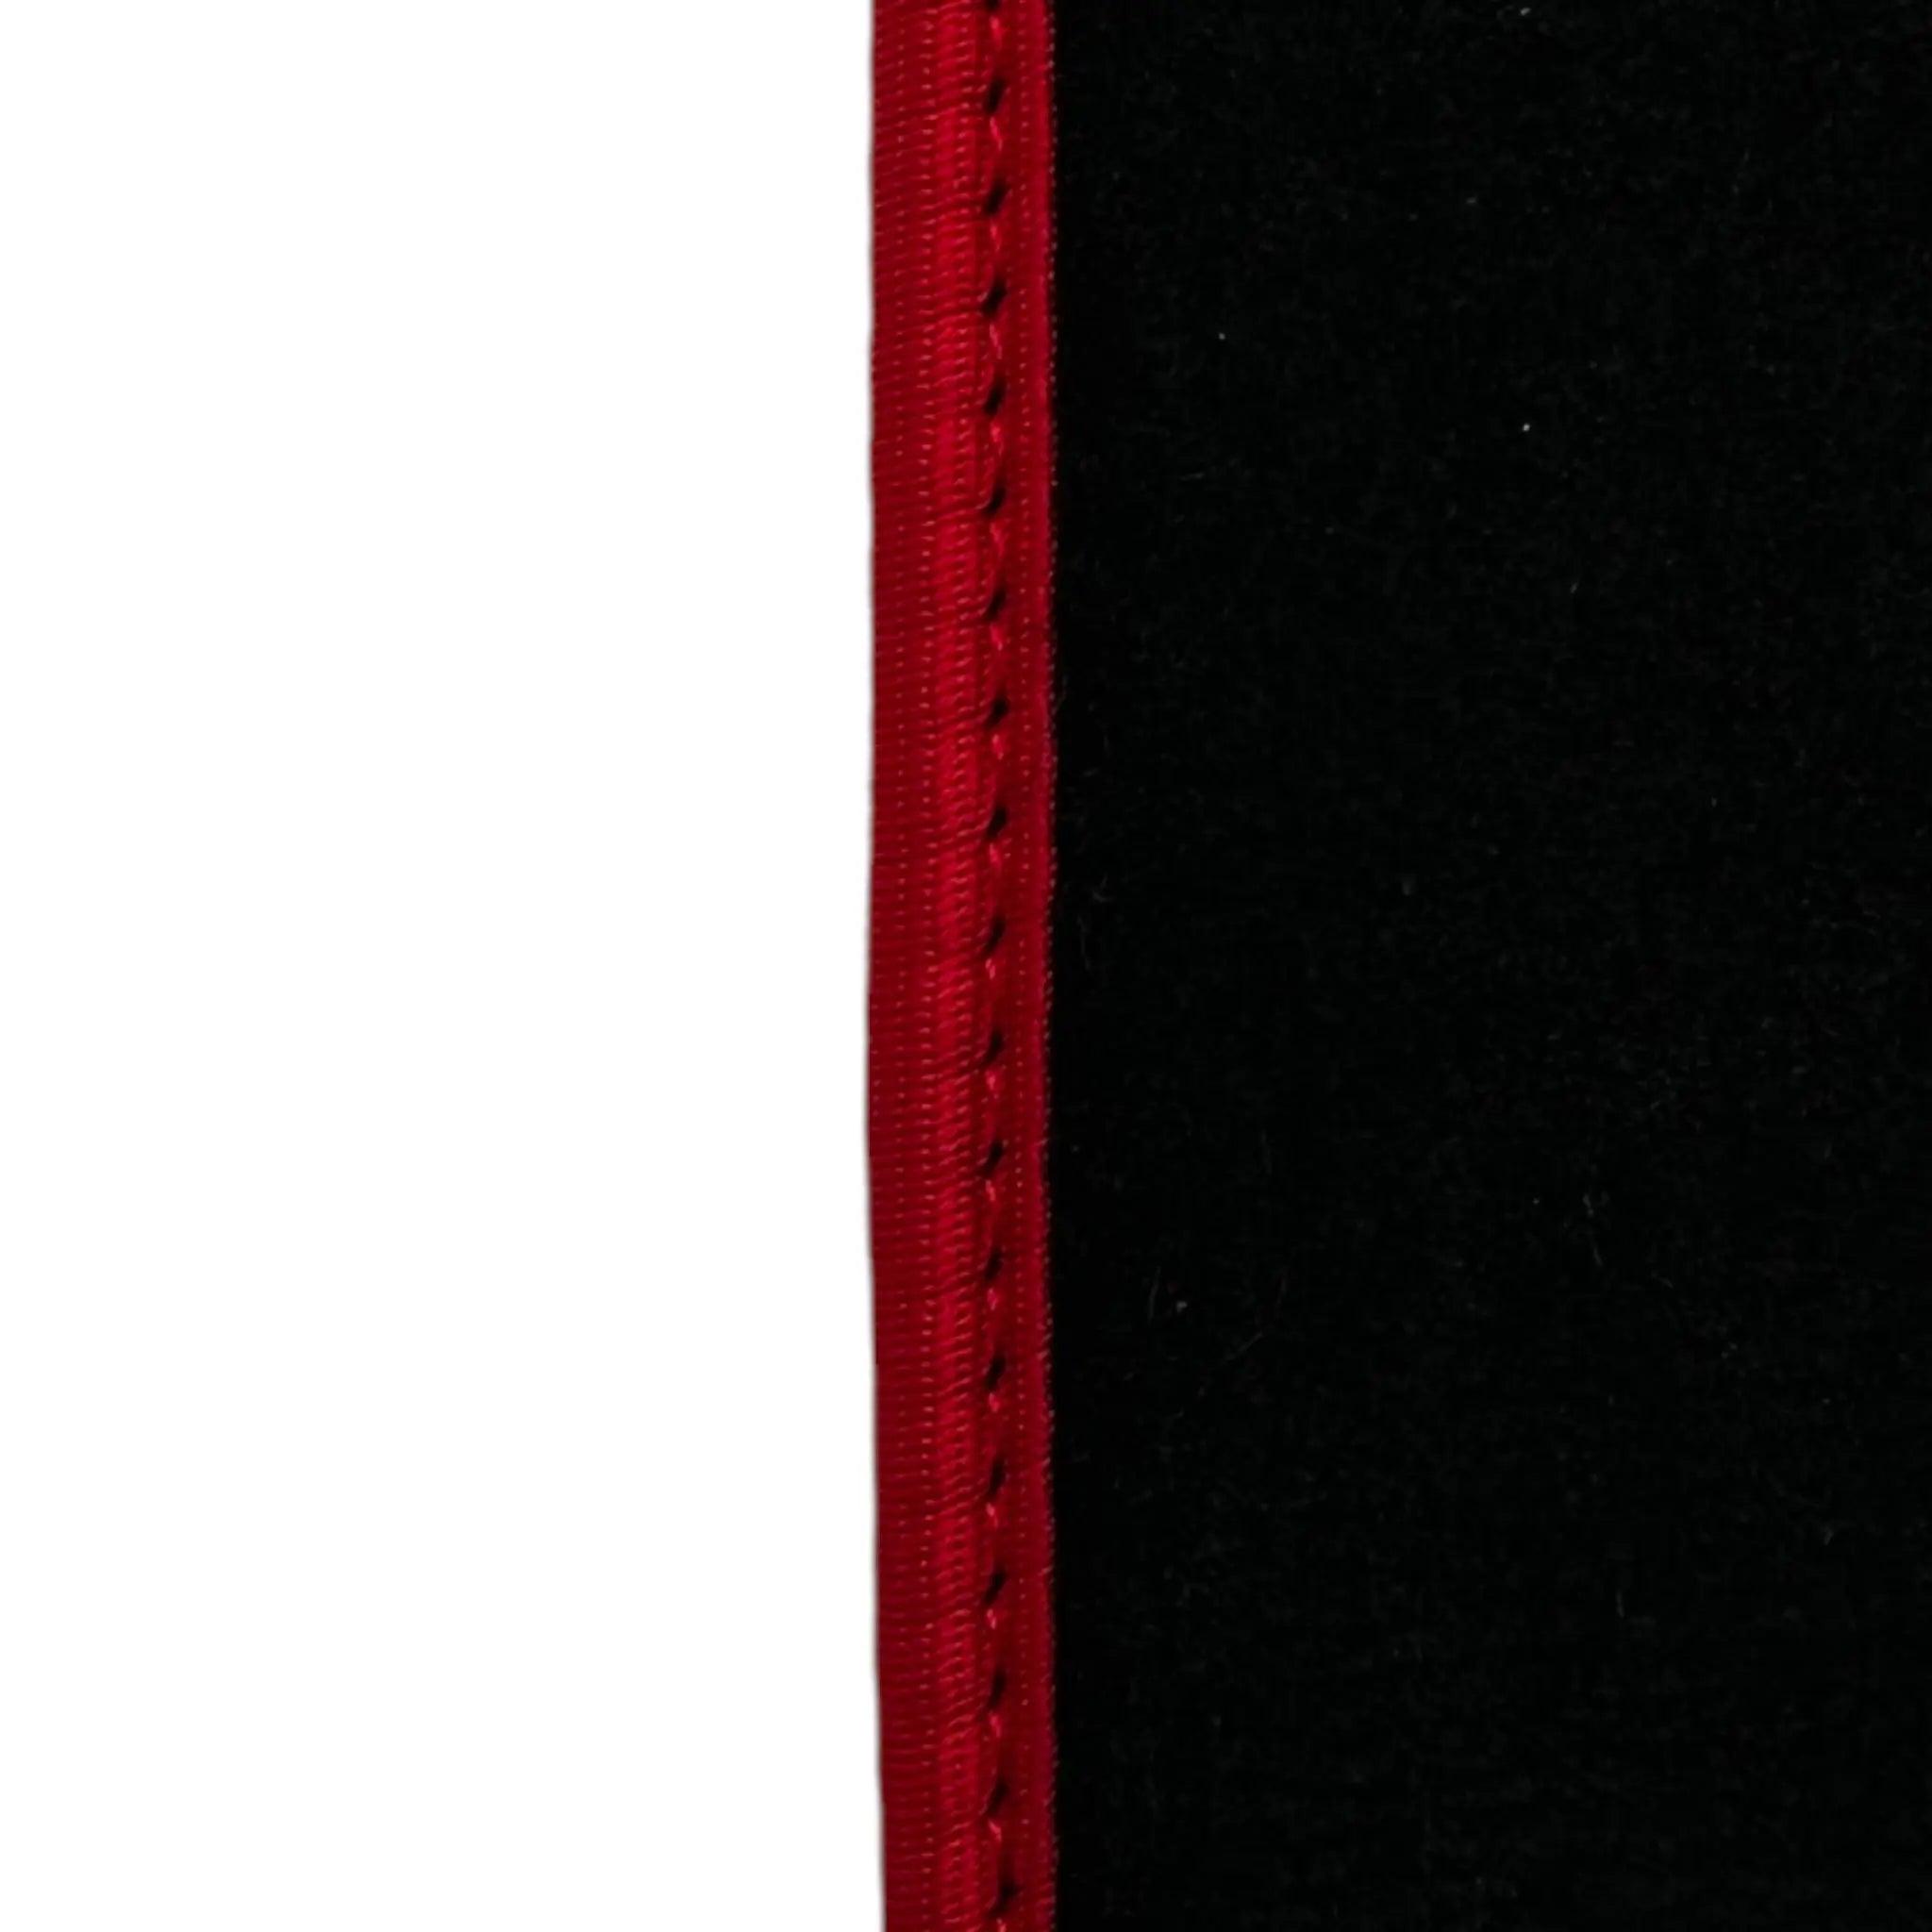 Black Floor Mats For Honda Civic VI (1995-2000) ER56 Design with Red Trim